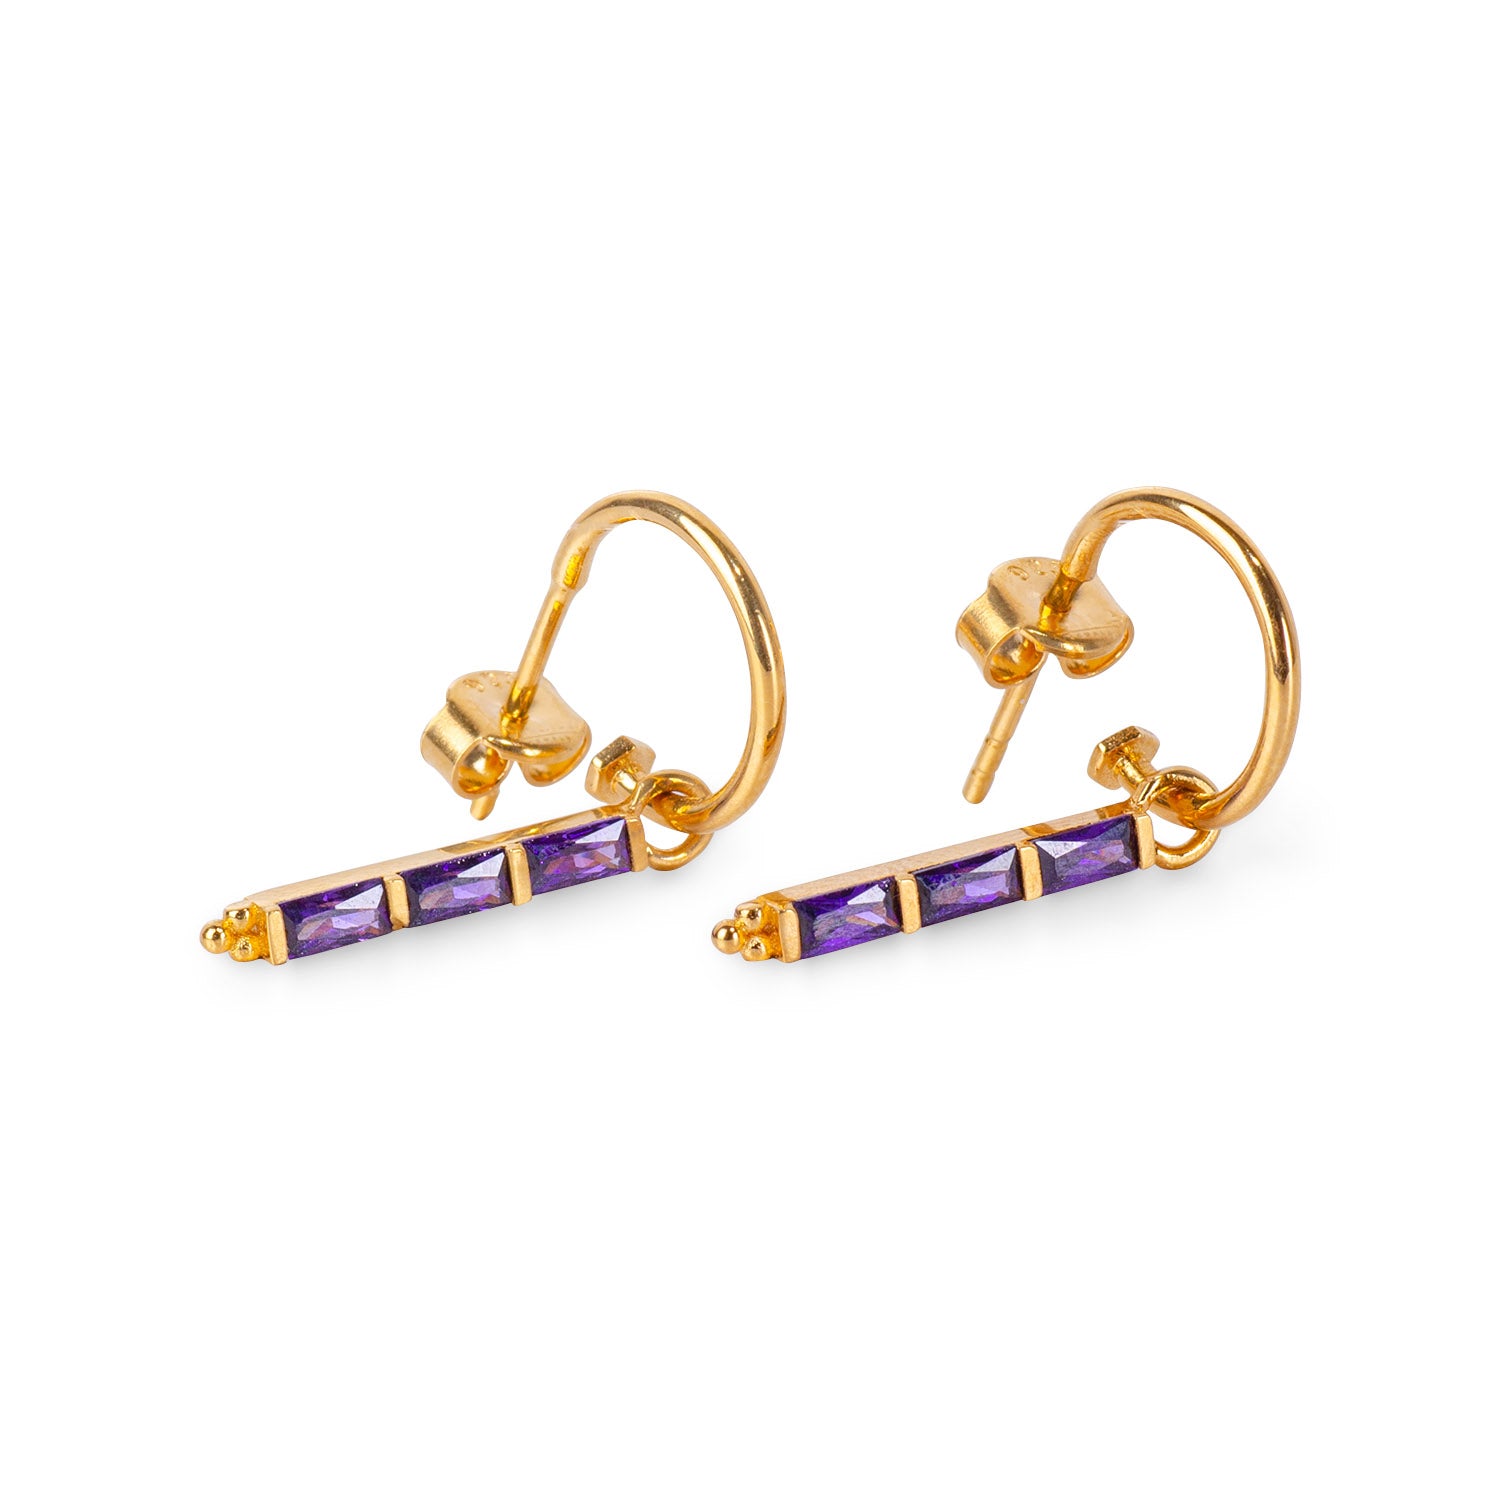 Theodora Amethyst 24K Gold Earrings - Gold Vermeil Earrings - Pretland | Spiritual Crystals & Jewelry